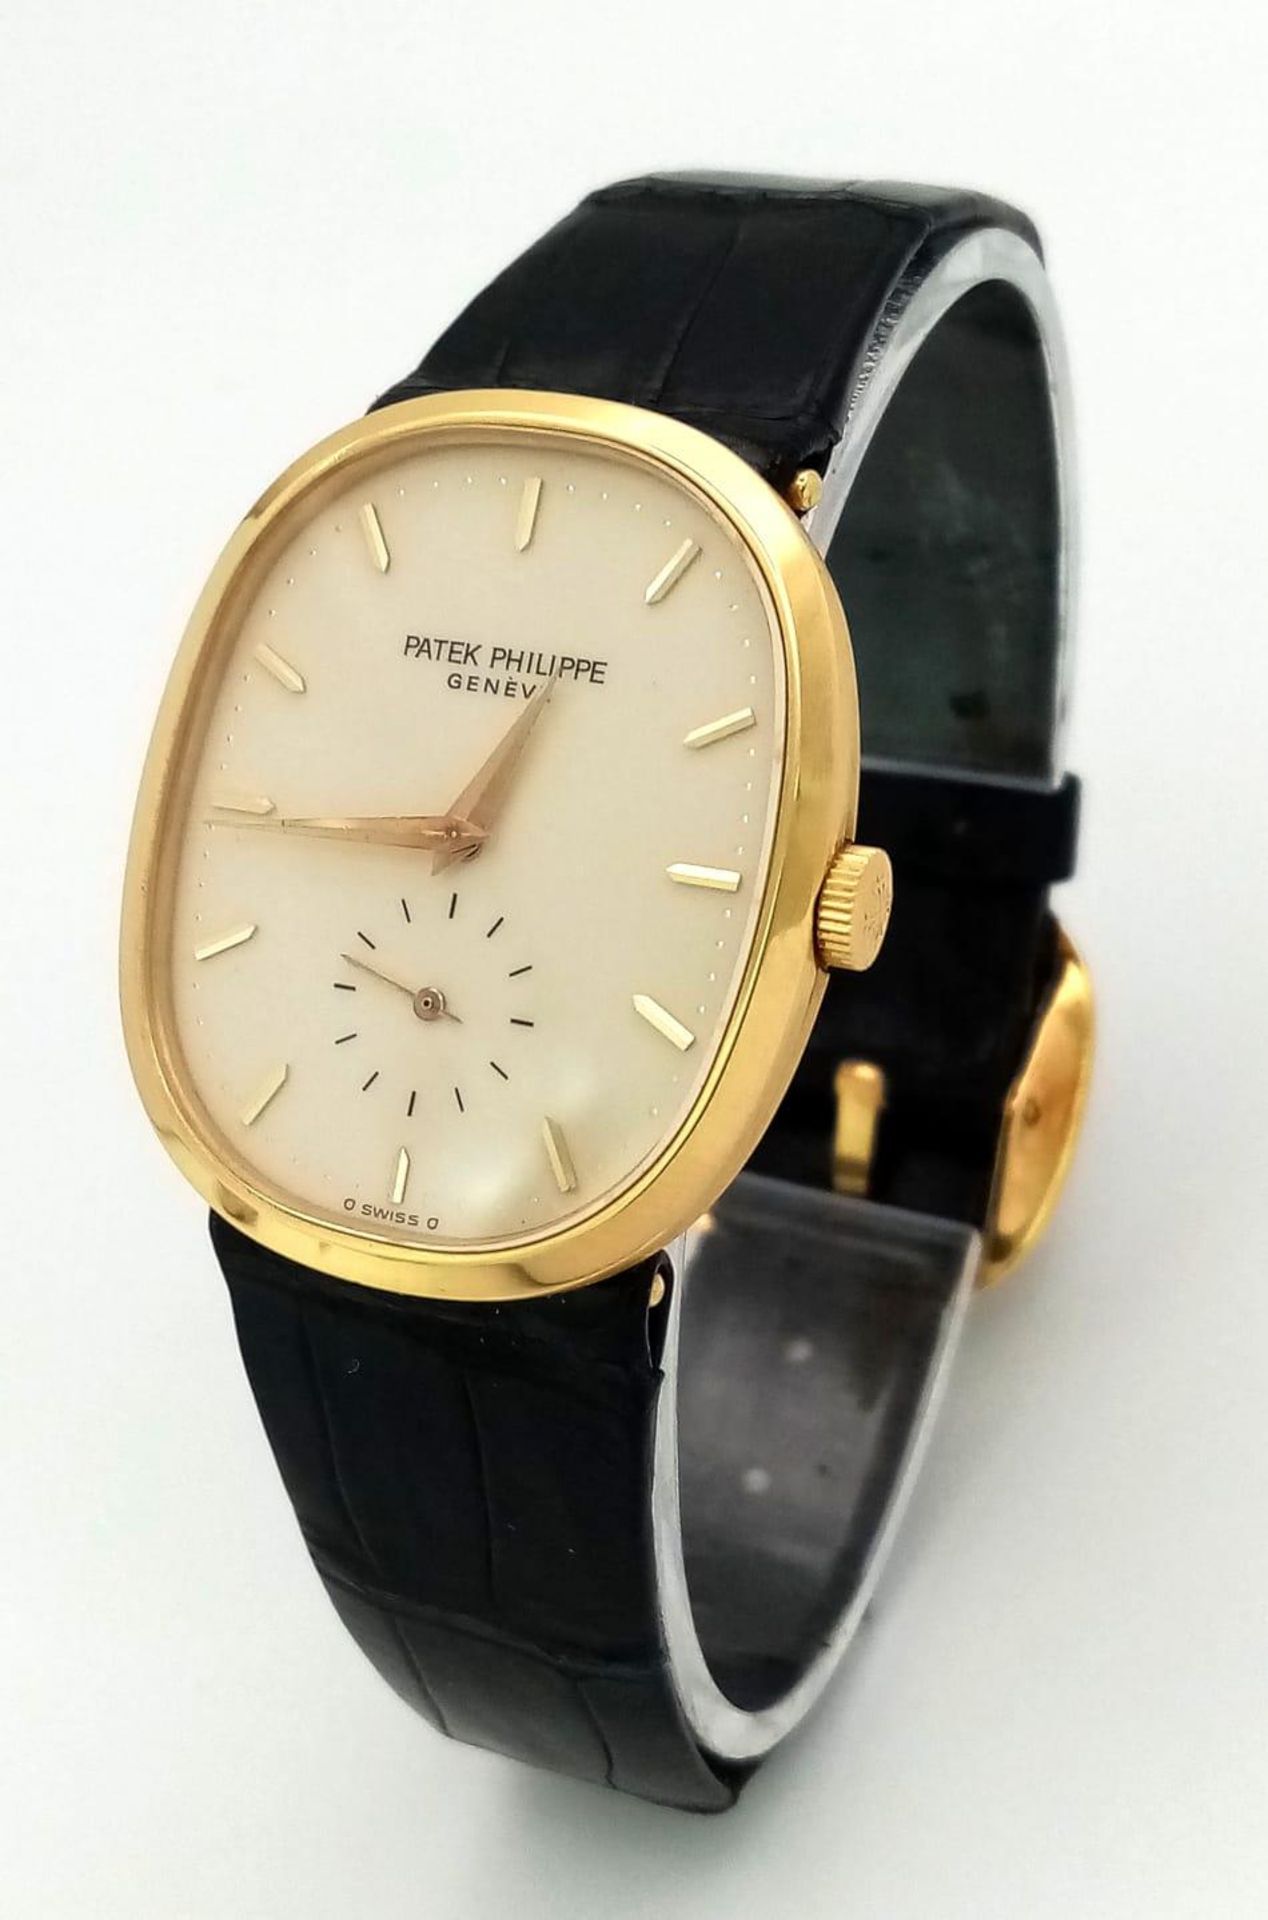 A Vintage Patek Phillipe 18K Gold Gents Watch. Original black leather strap with 18k gold buckle.